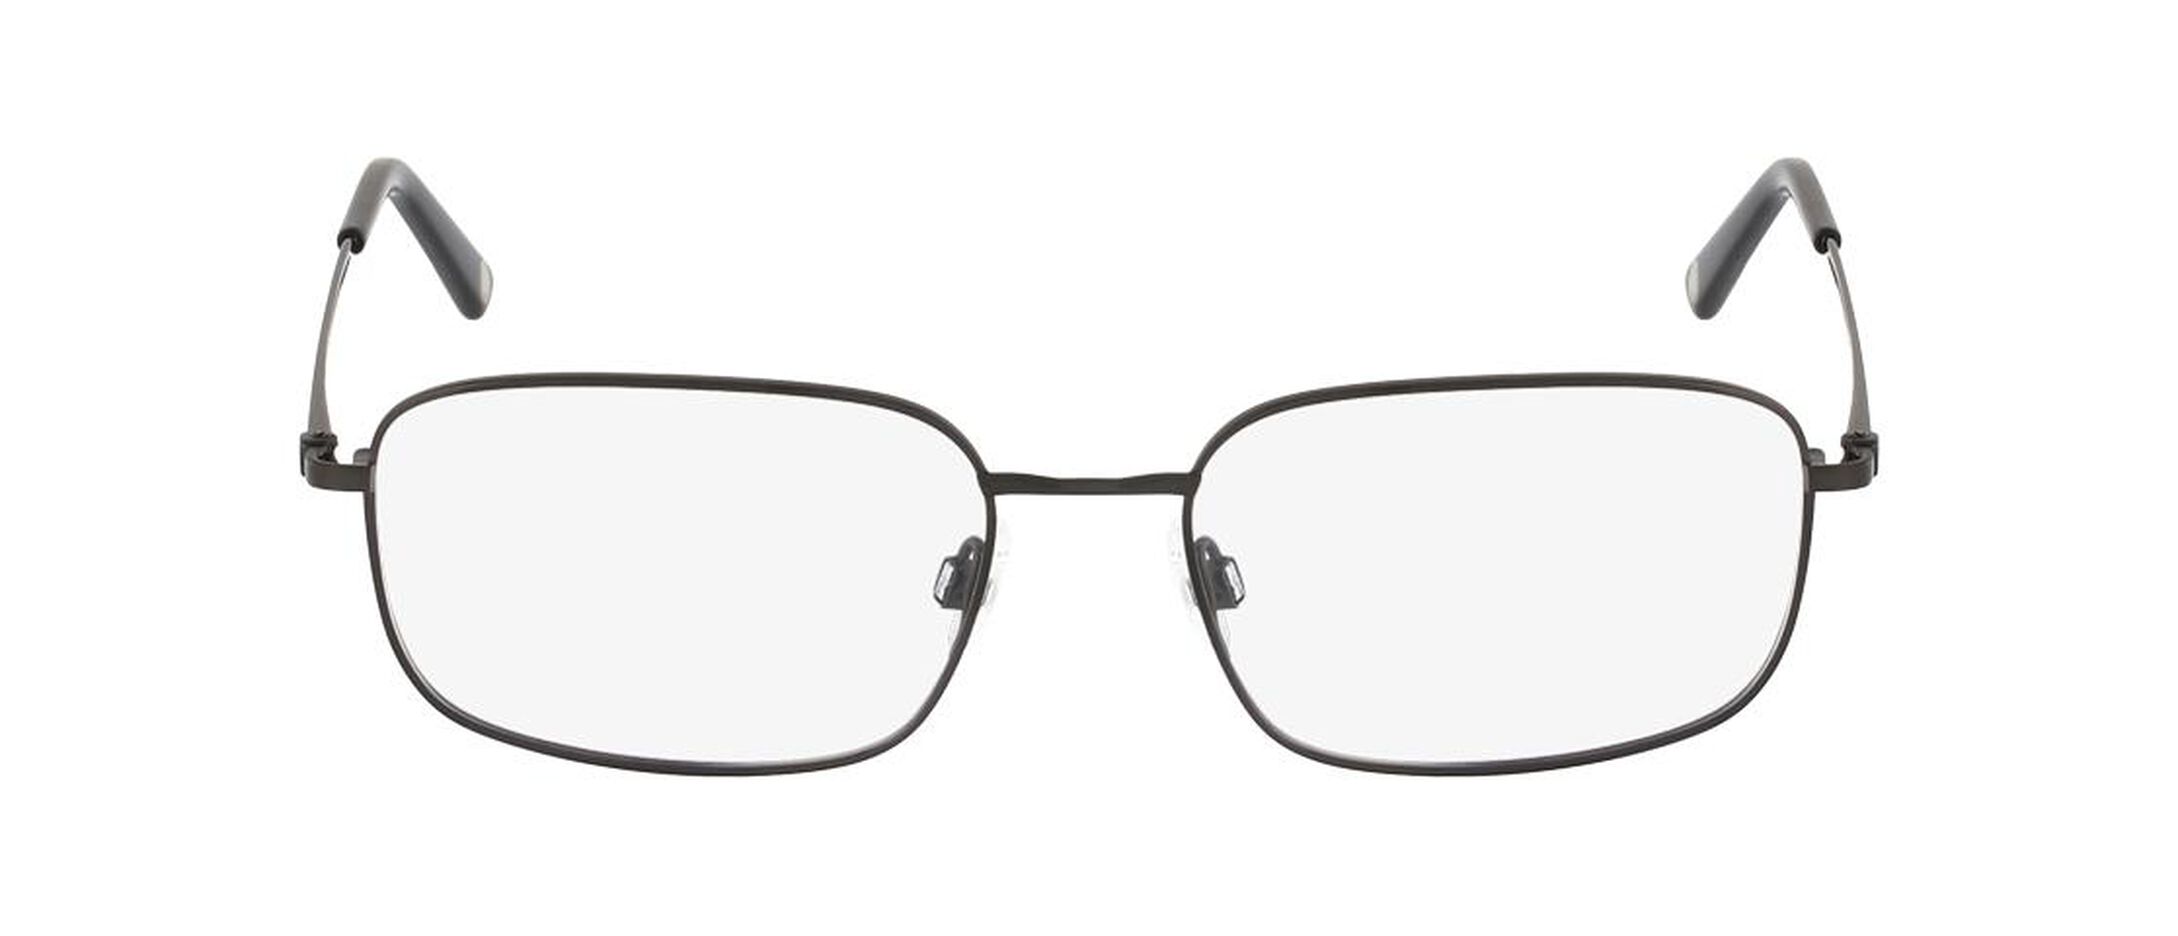 Flexon FLEXON BENJAMIN 600 Glasses | Free Shipping and Returns | Eyeconic